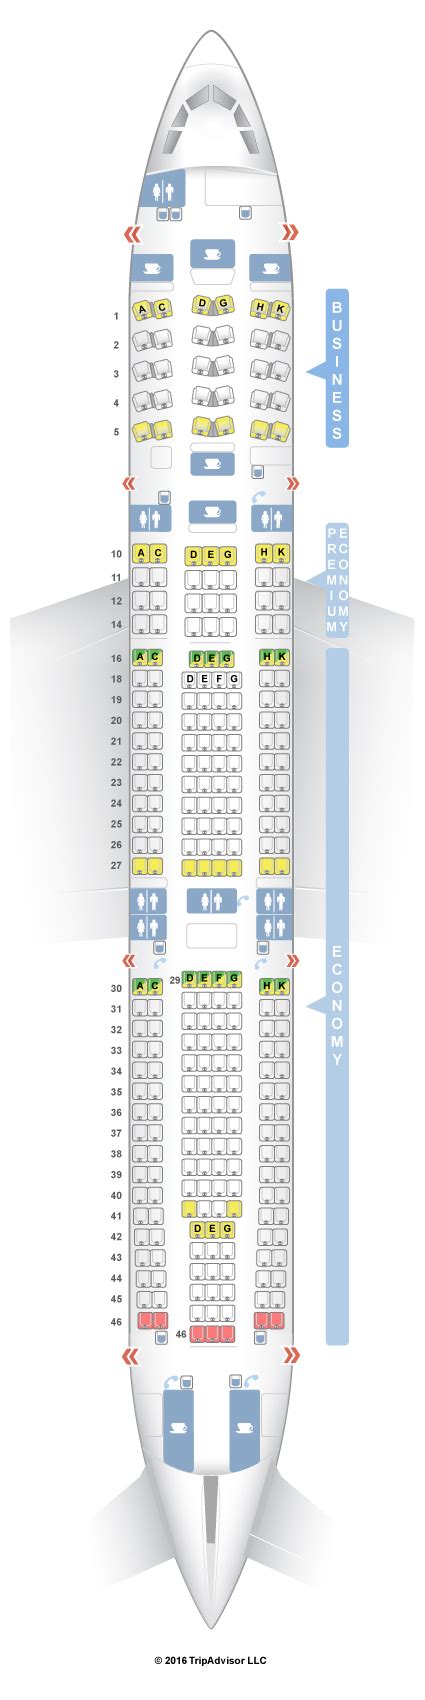 A340 300 Lufthansa Seat Map Image To U